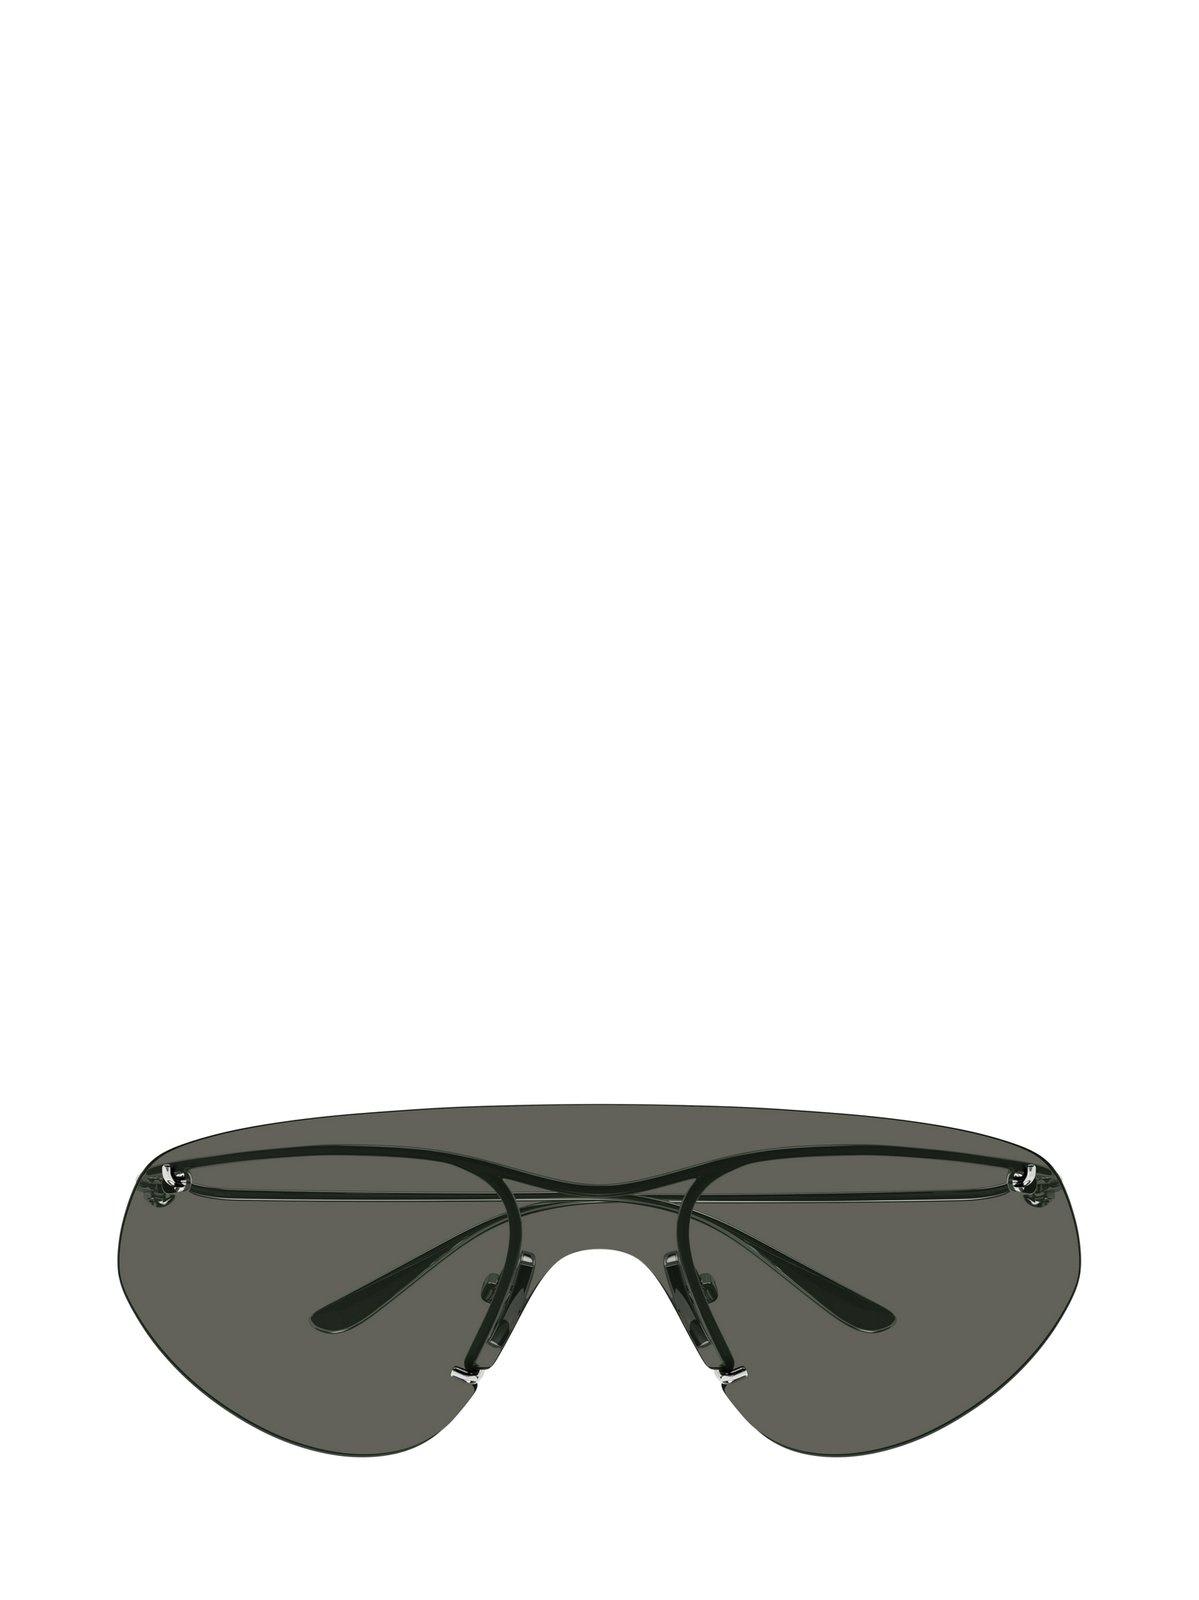 Knot Shield Sunglasses